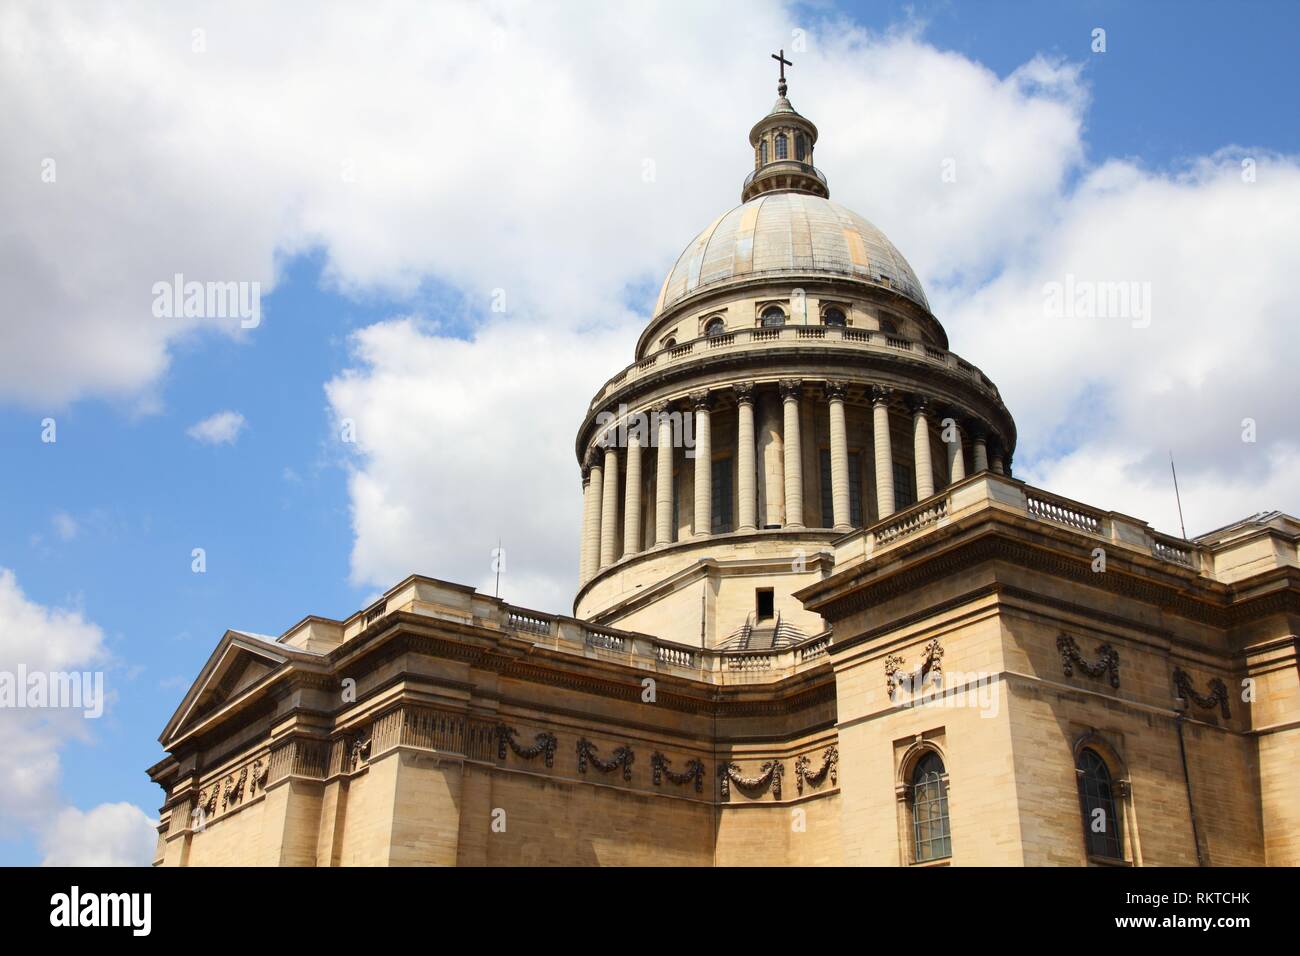 Paris, France - famous Pantheon in Latin Quarter. UNESCO World Heritage Site. Stock Photo